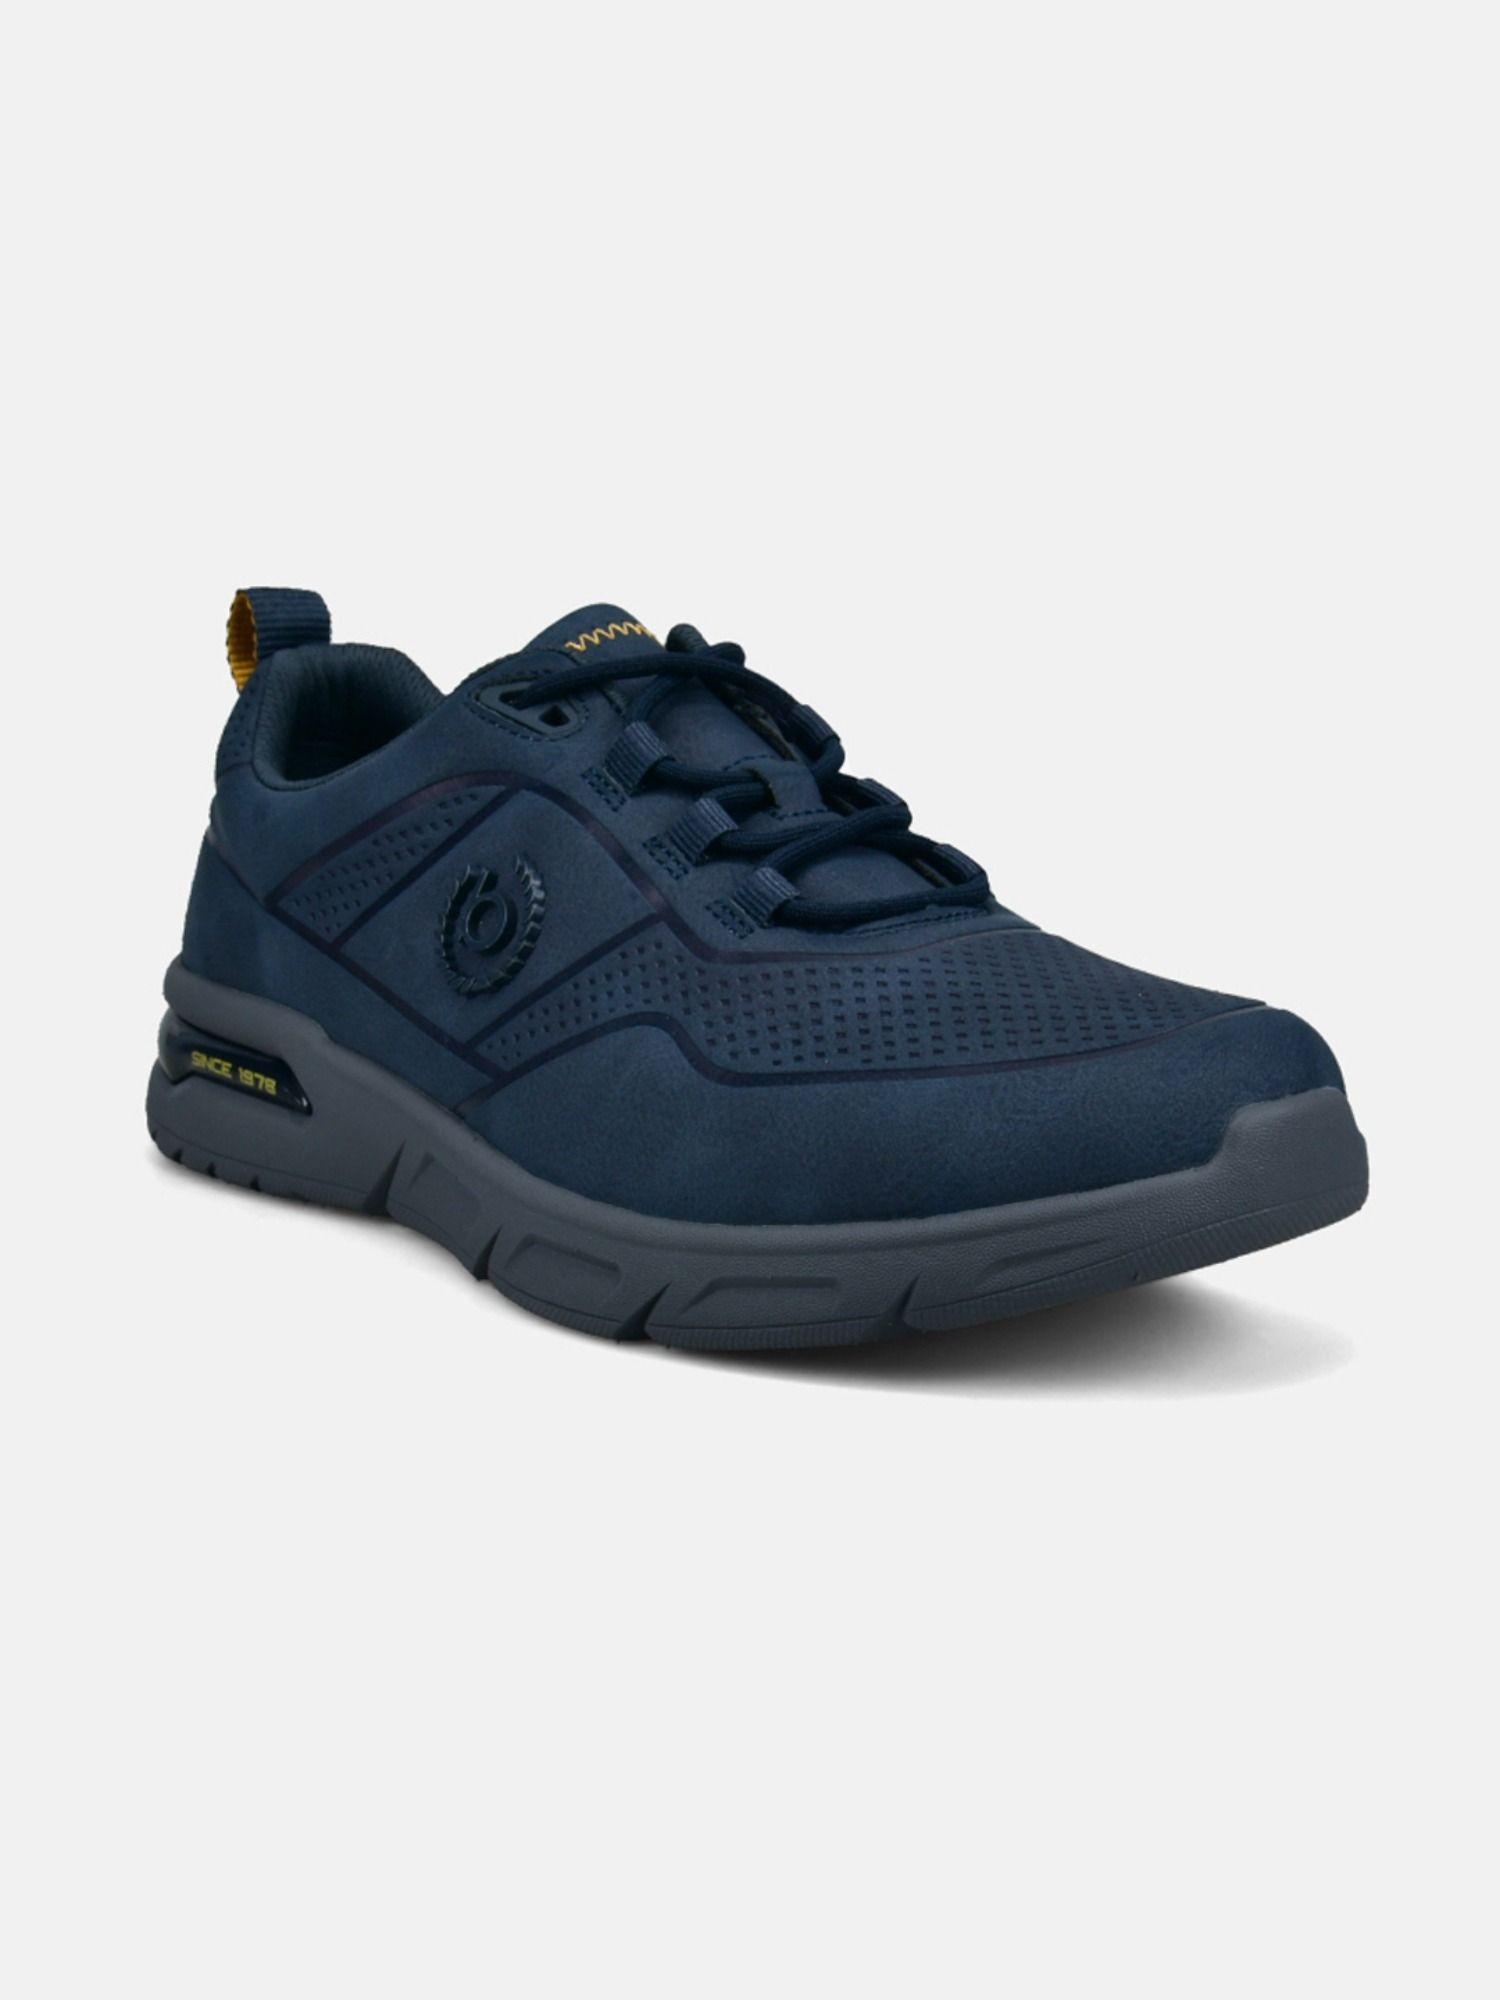 nubola dark navy blue men sports walking shoes